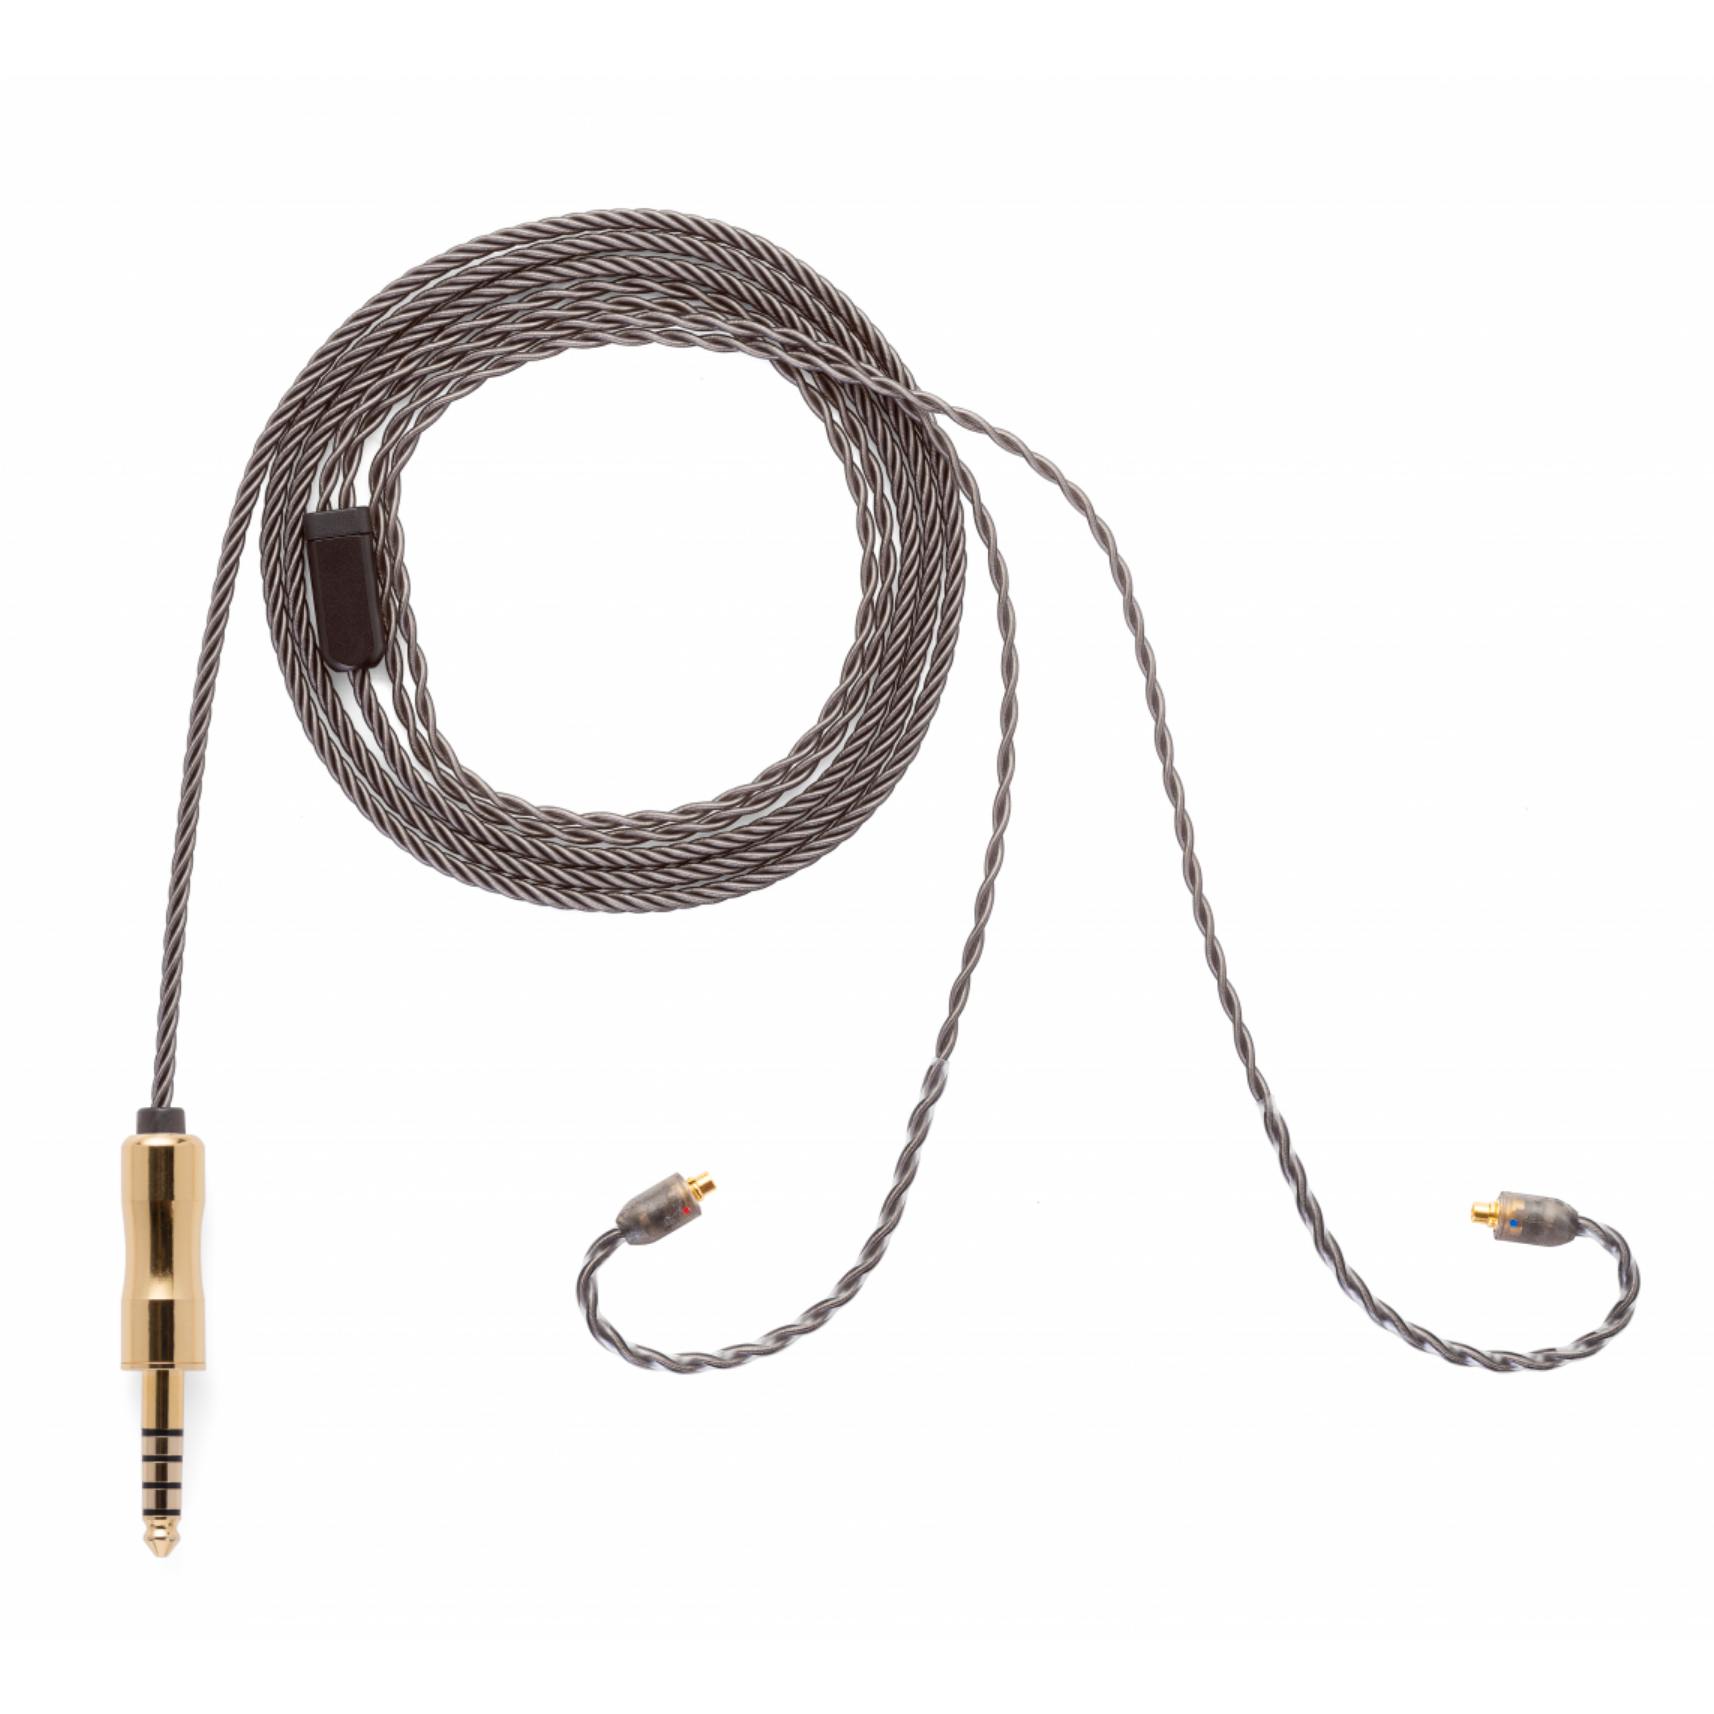 ALO audio Super Smoky Litz Cable | MMCX IEM Upgrade Cable